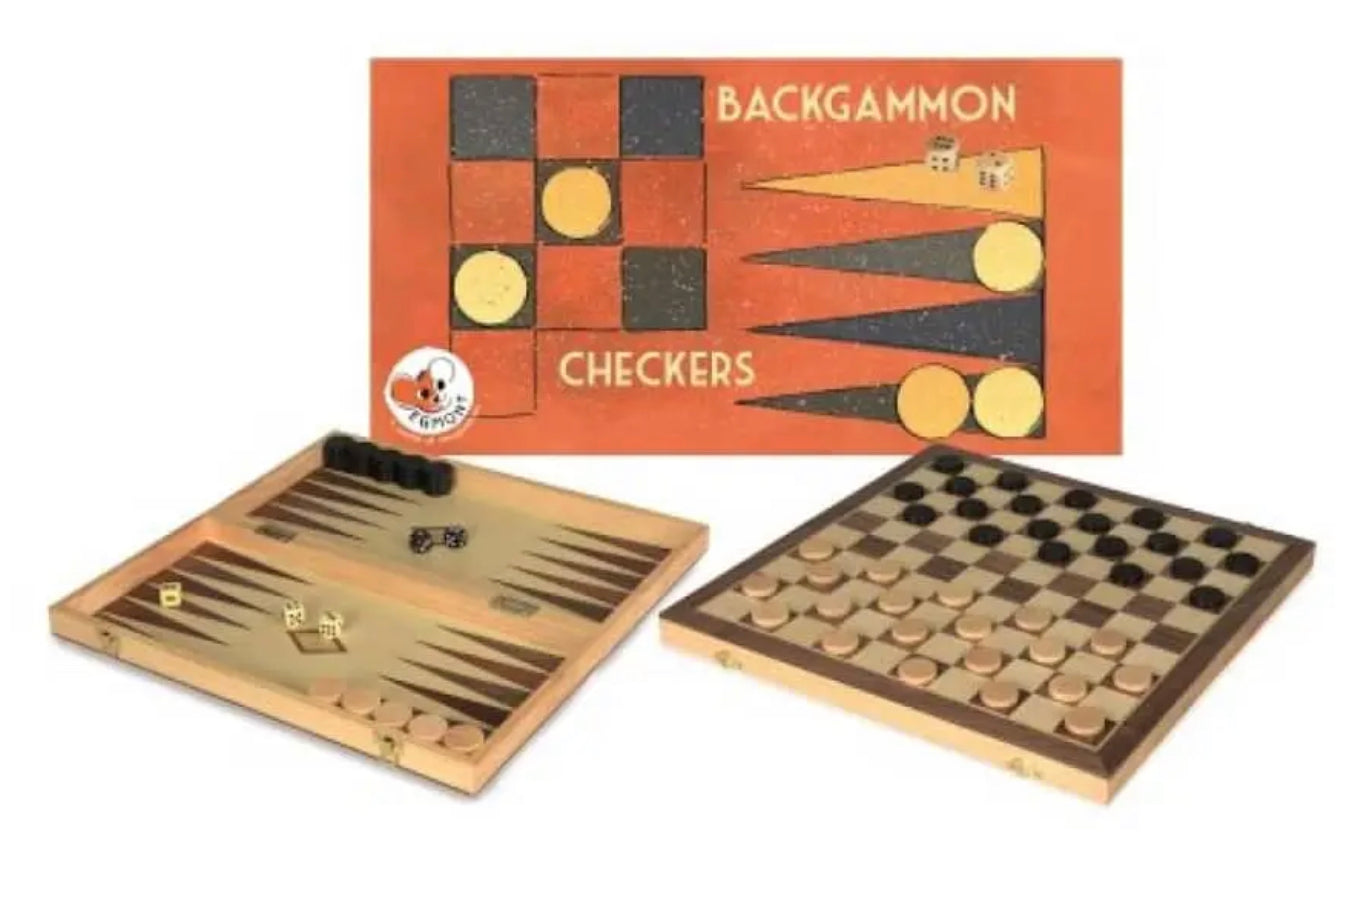 Backgammon and checkers set